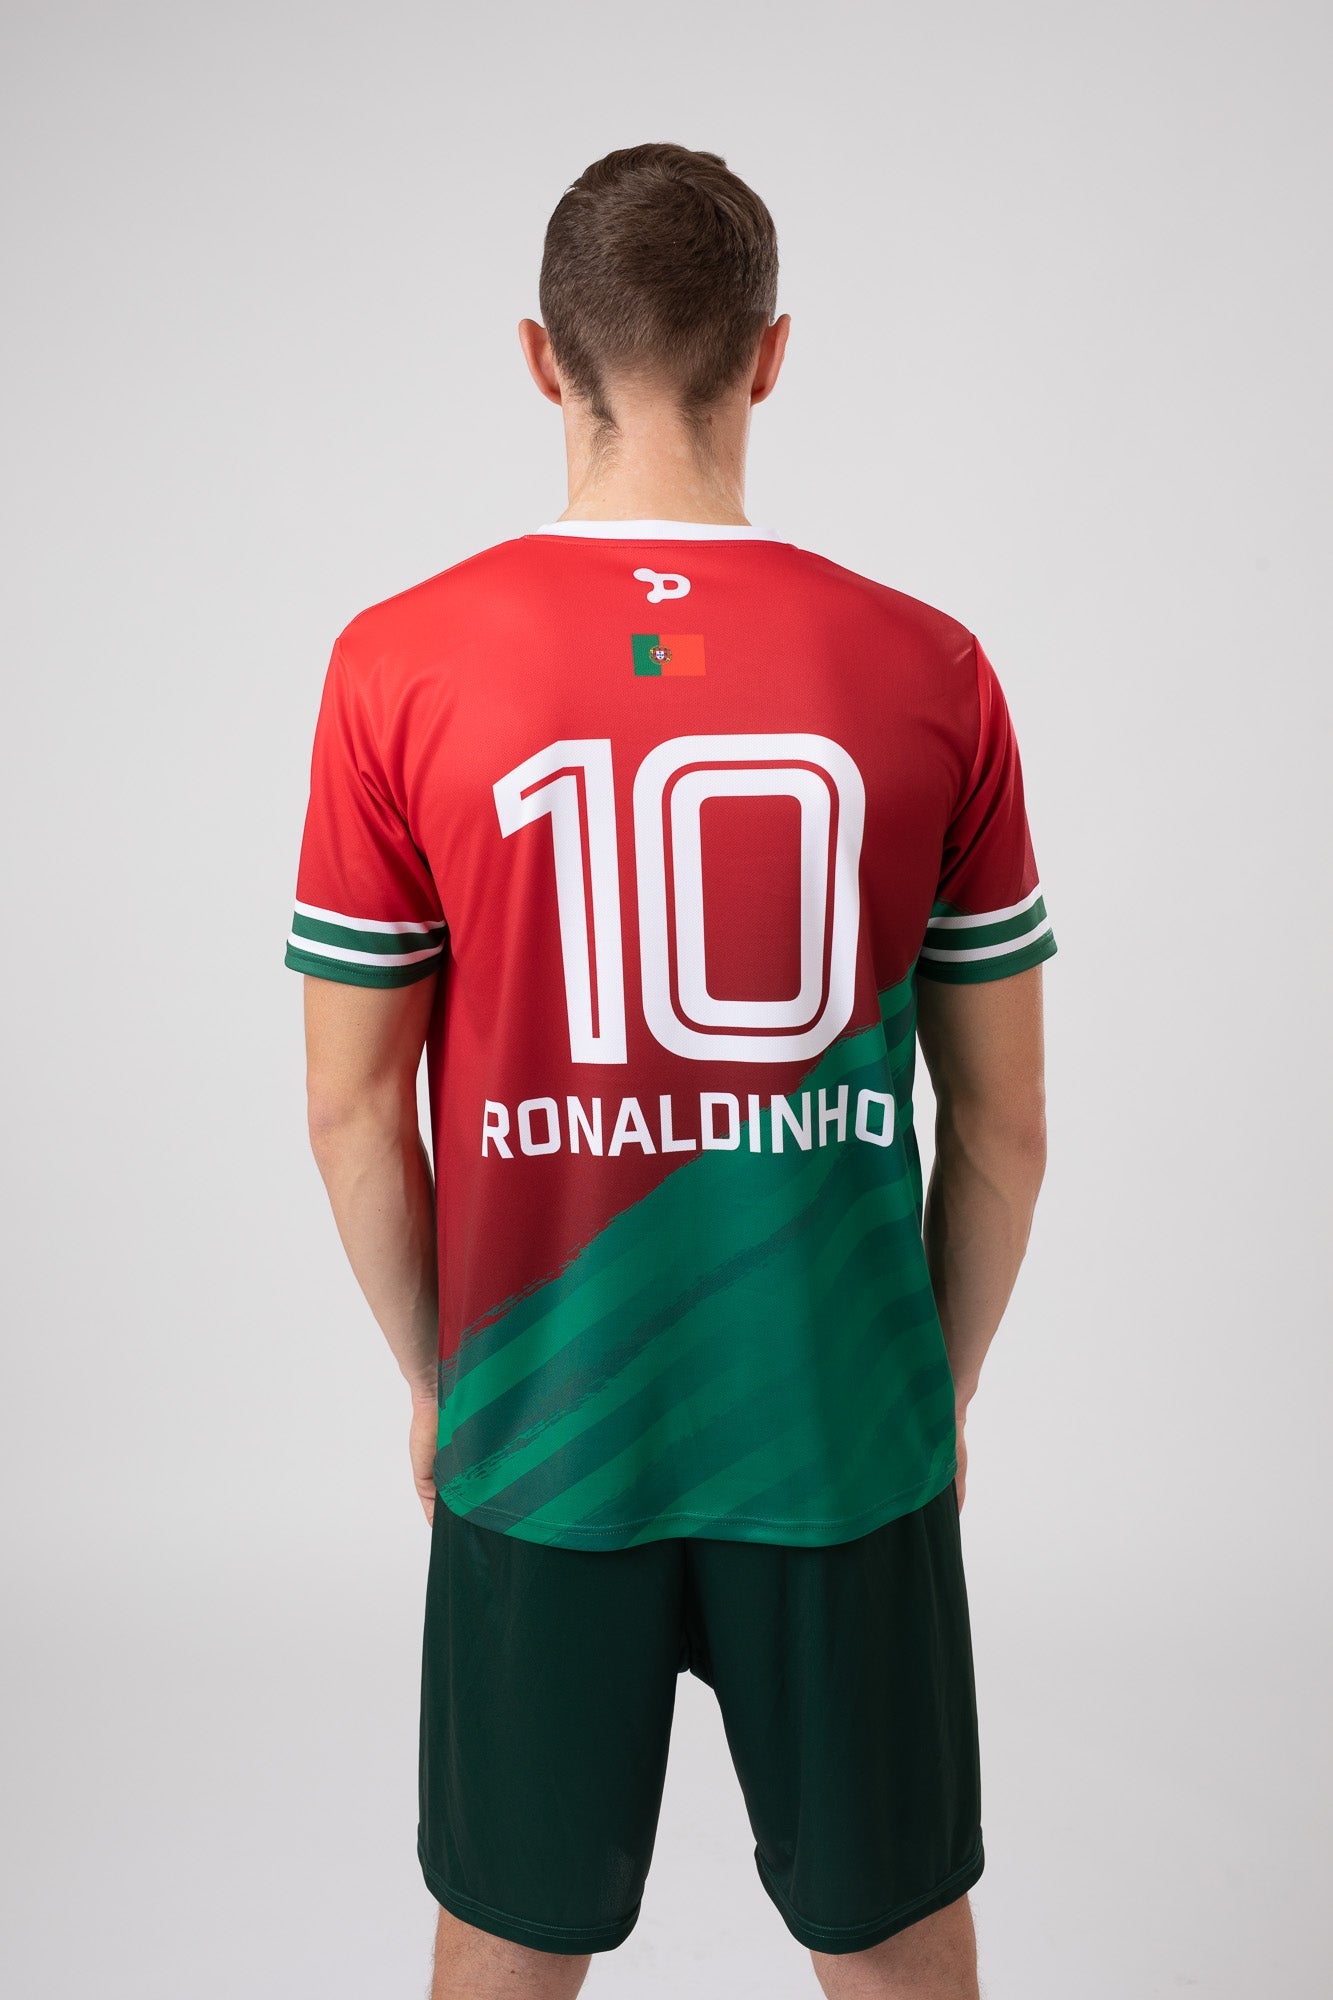 Ronaldinho Portugal Jersey/Camisa Replica Wholesale